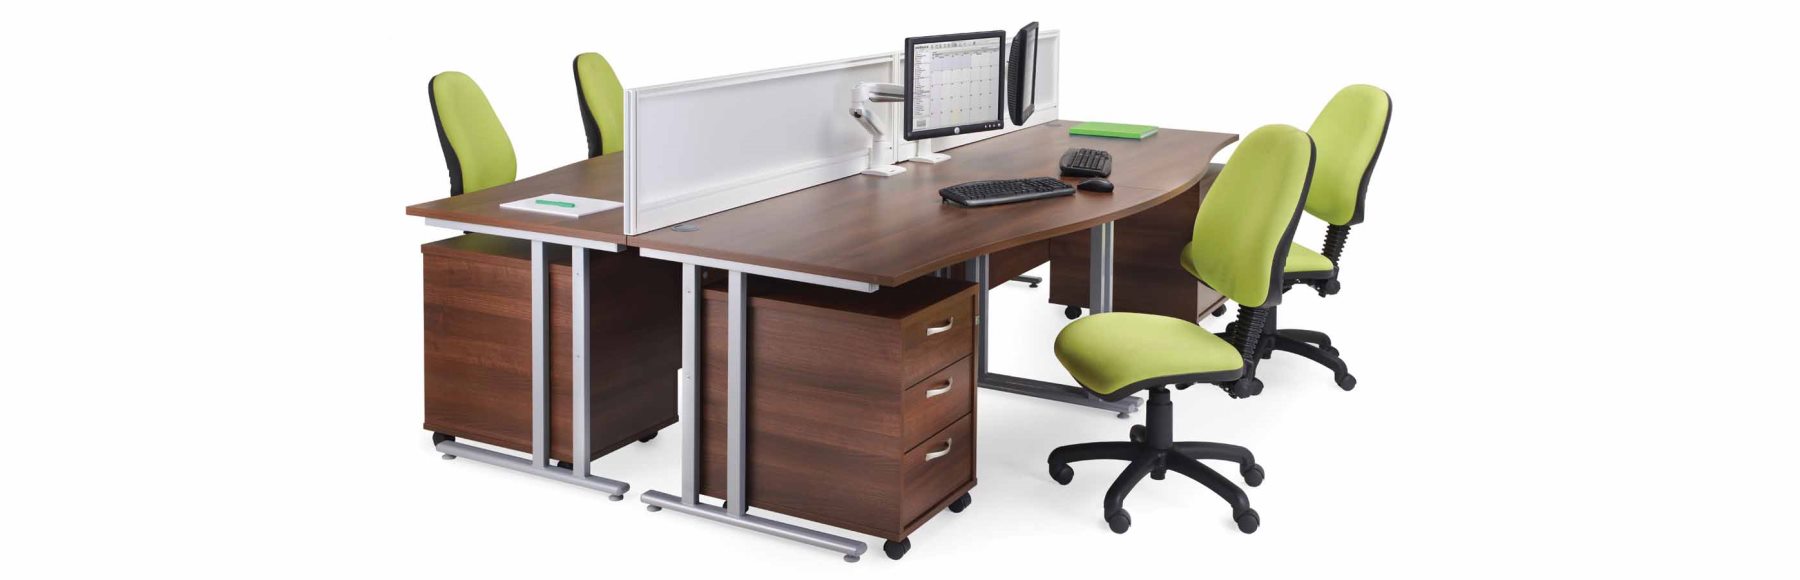 Office Computer Desks